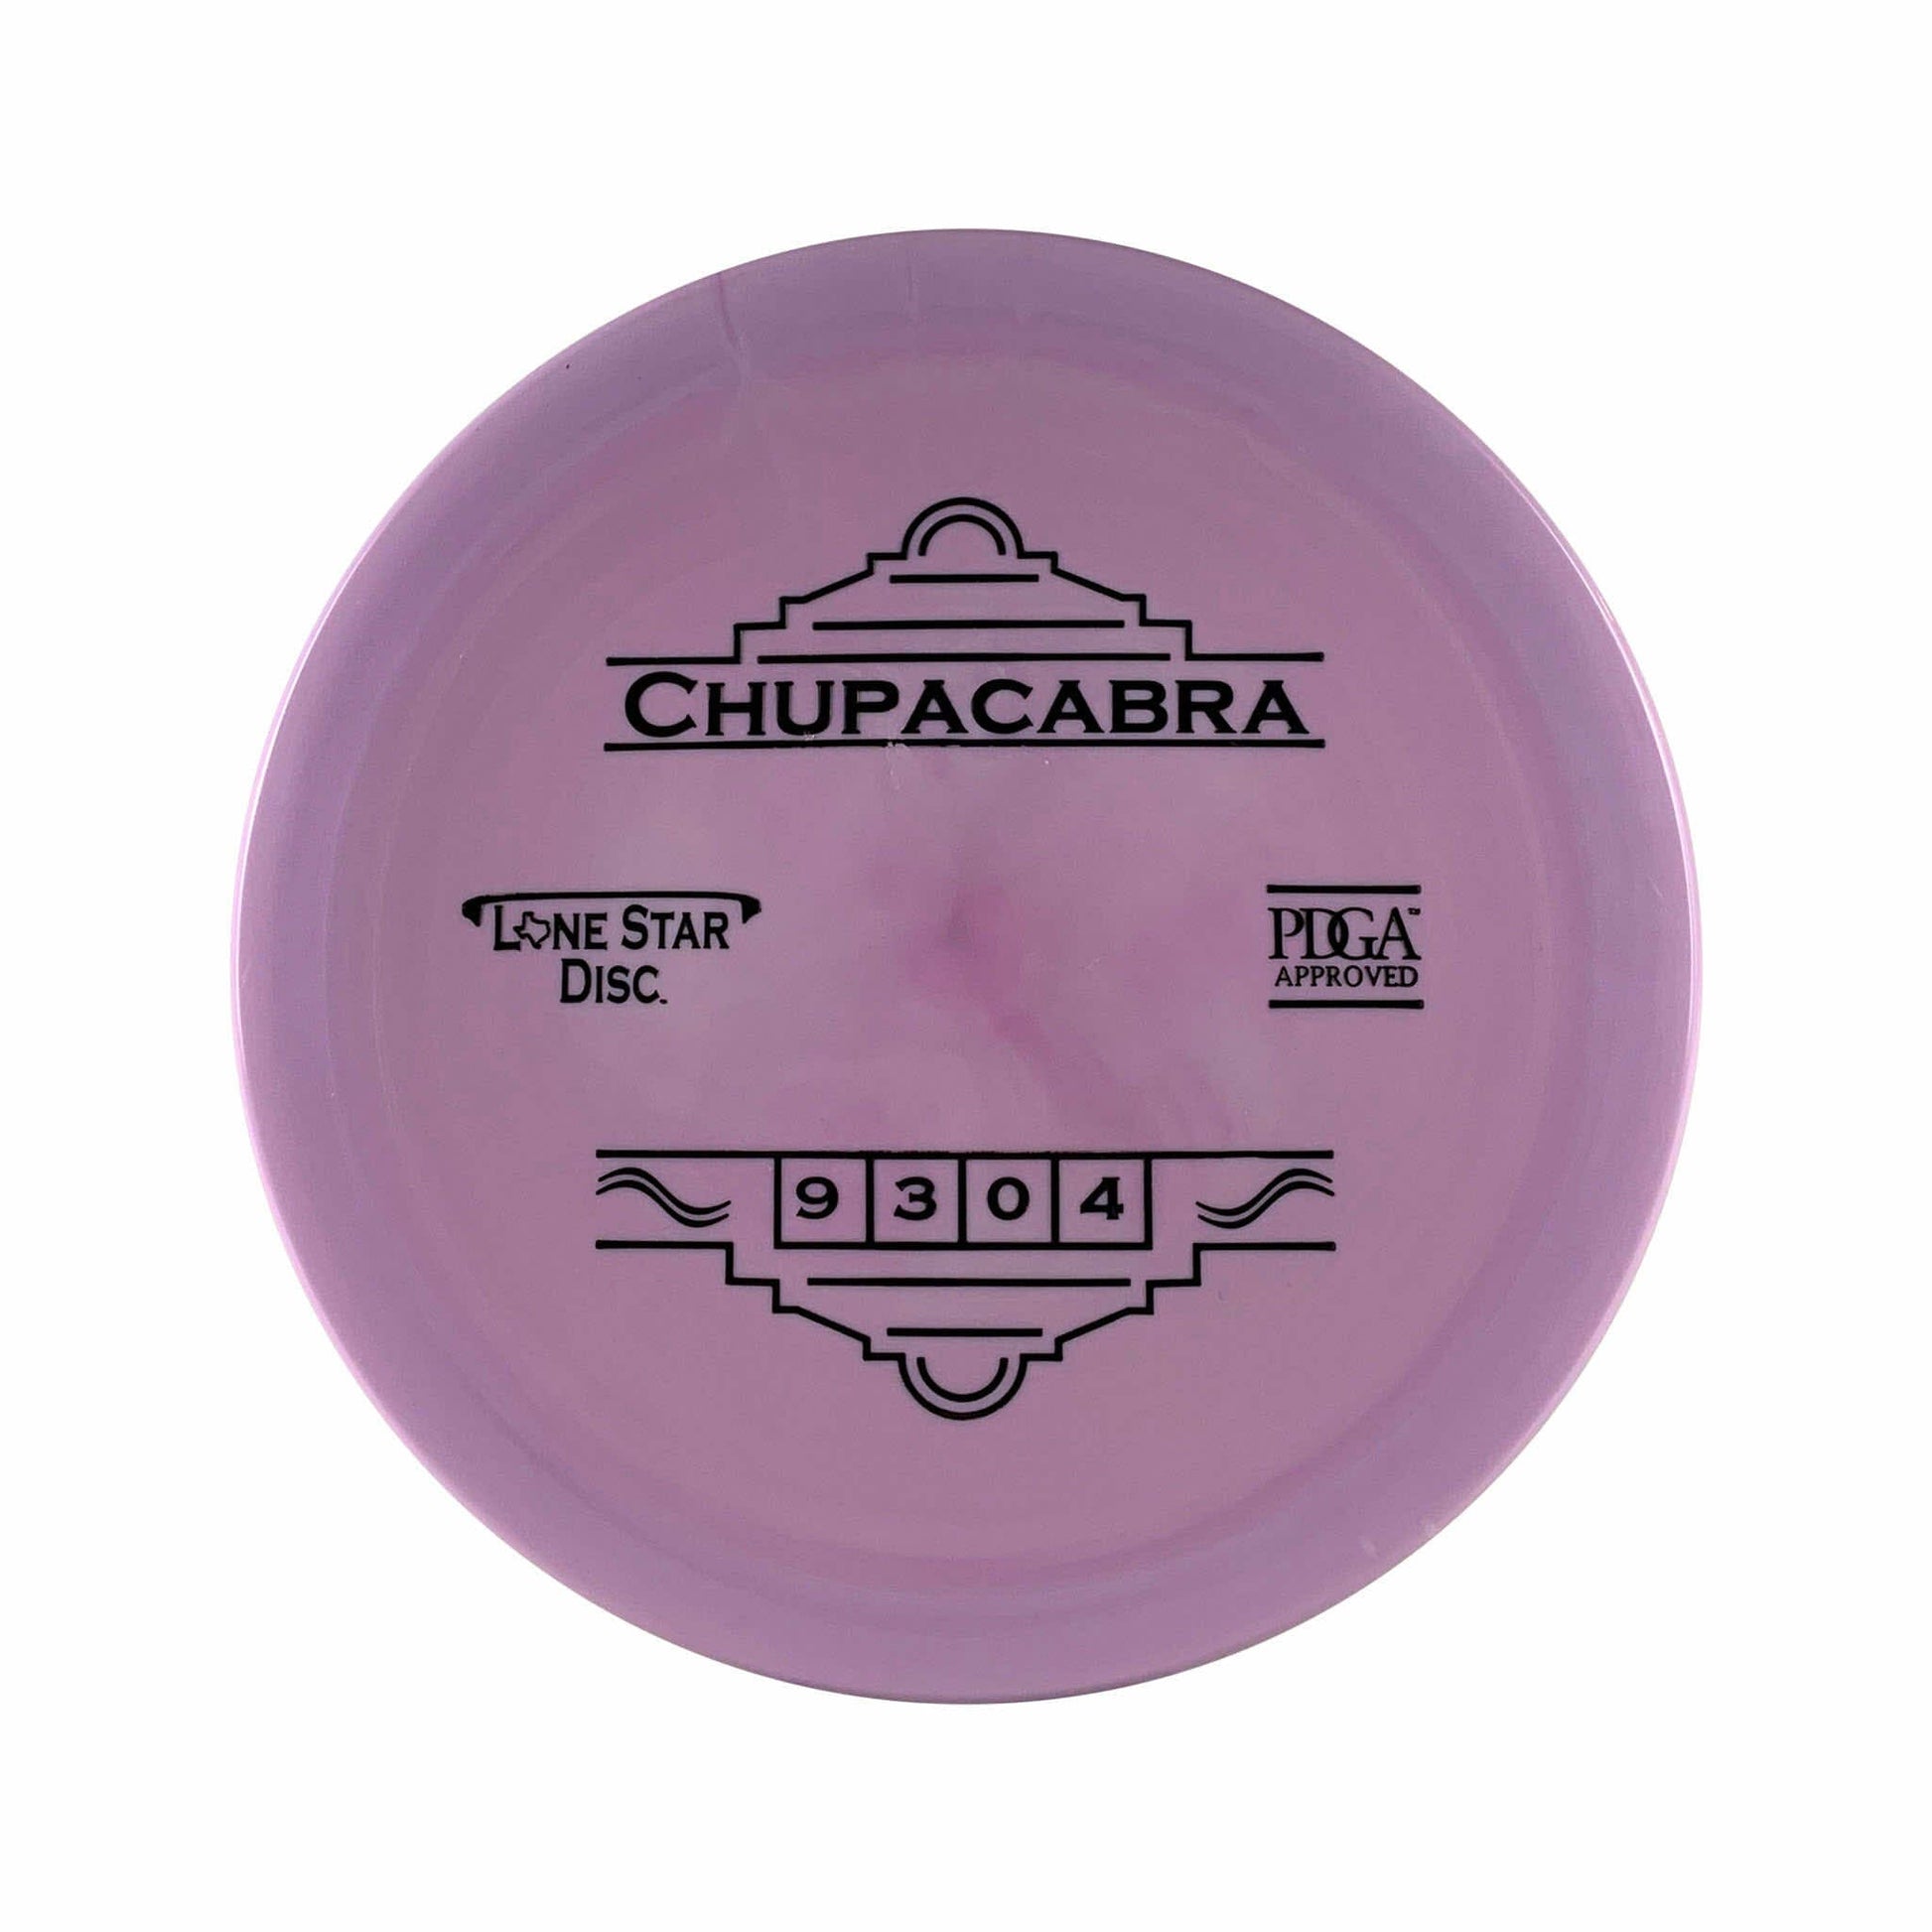 Lima Chupacabra Disc Lonestar Disc light purple 158 